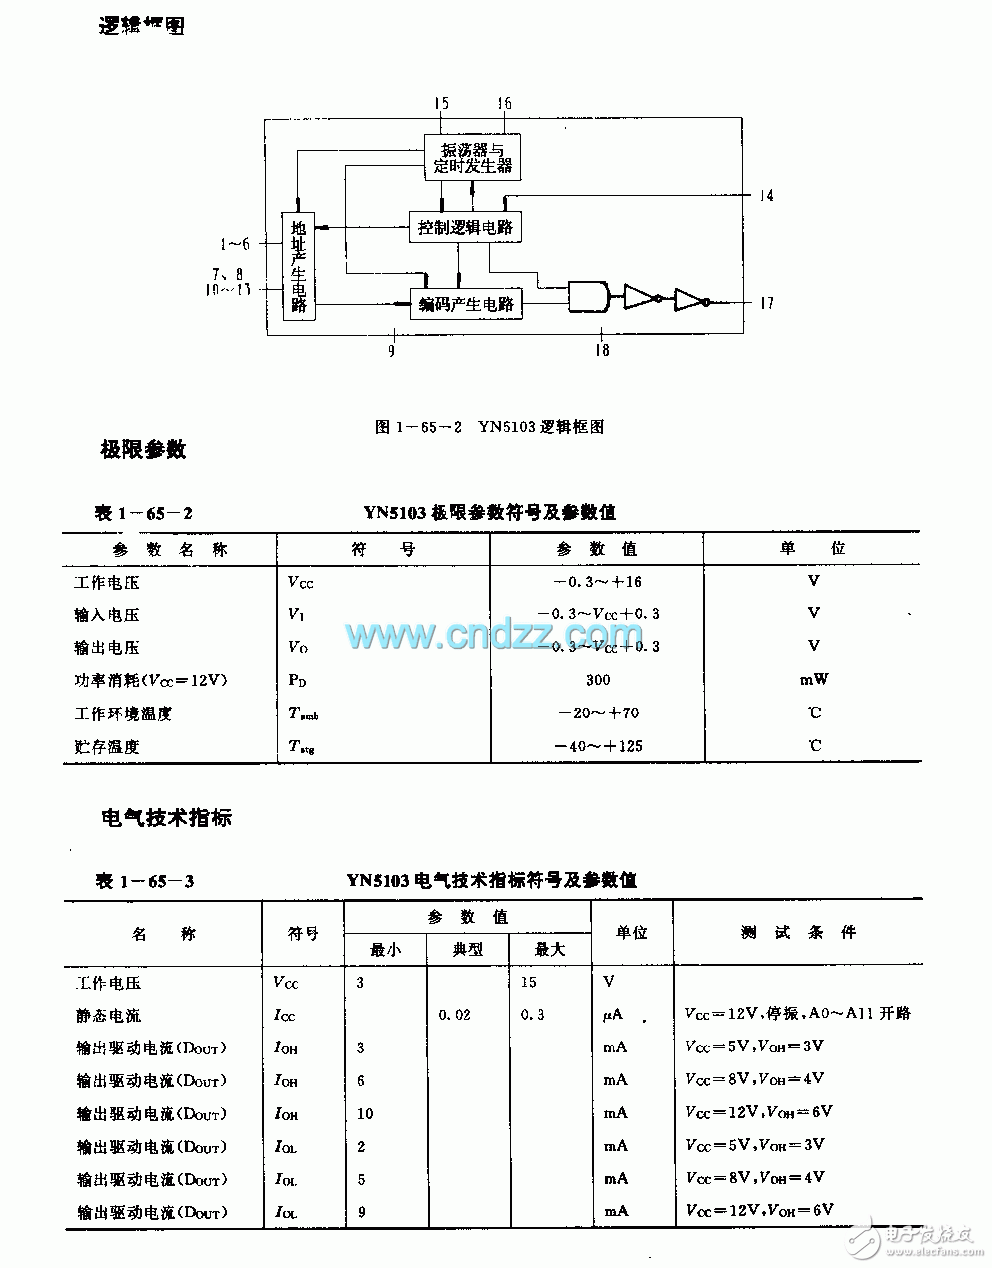 YH5103 / YH5103-IR circuit technology introduction